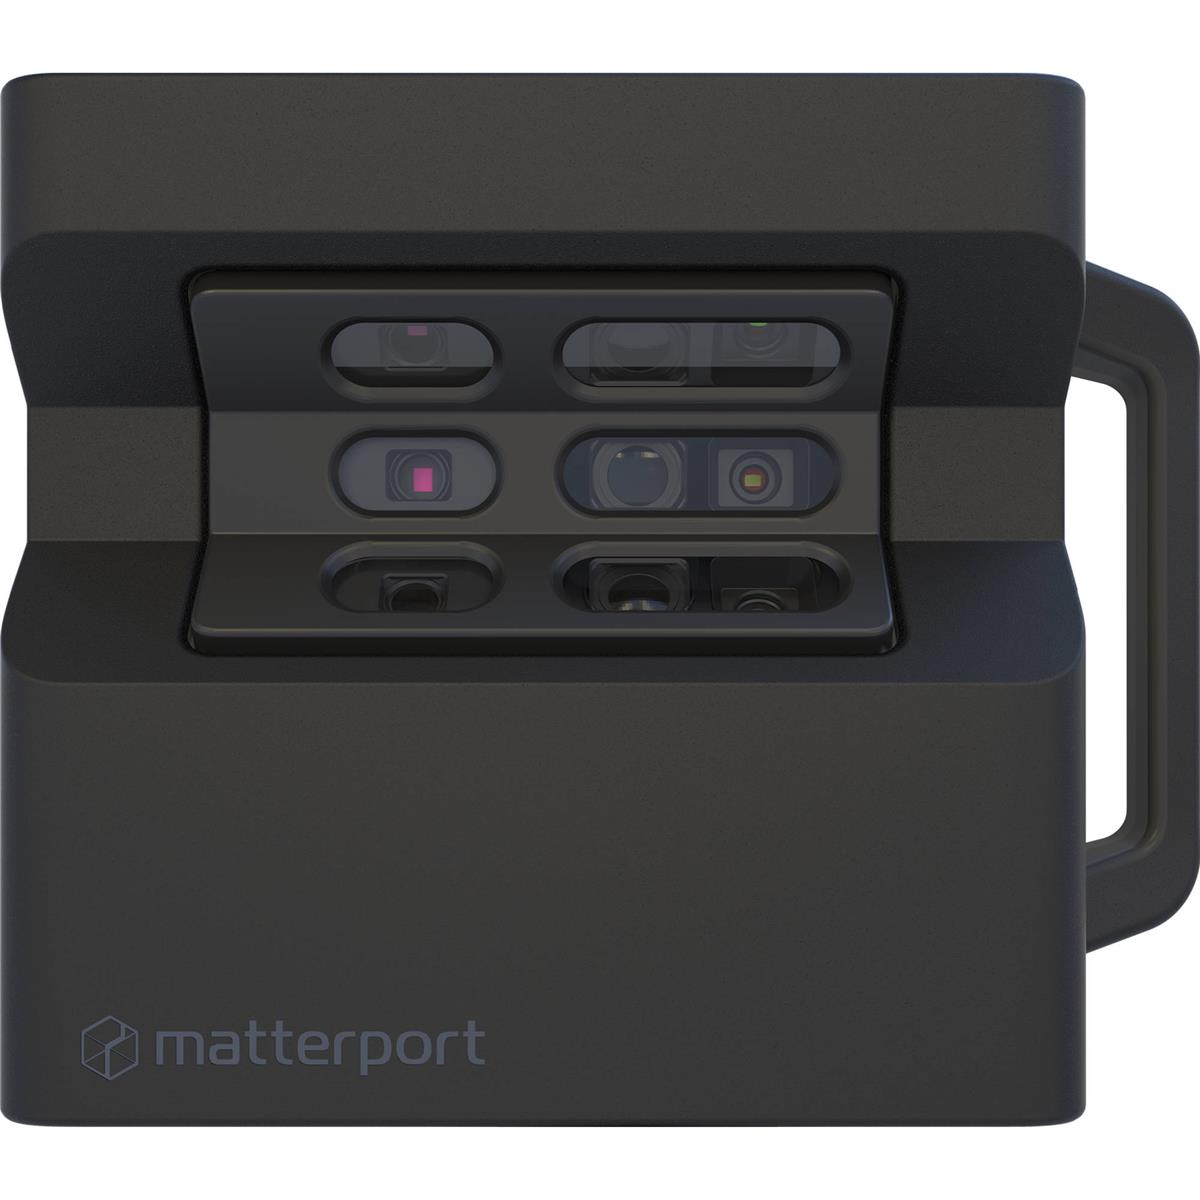 Image of Matterport Pro2 134MP Professional Capture 3D Camera